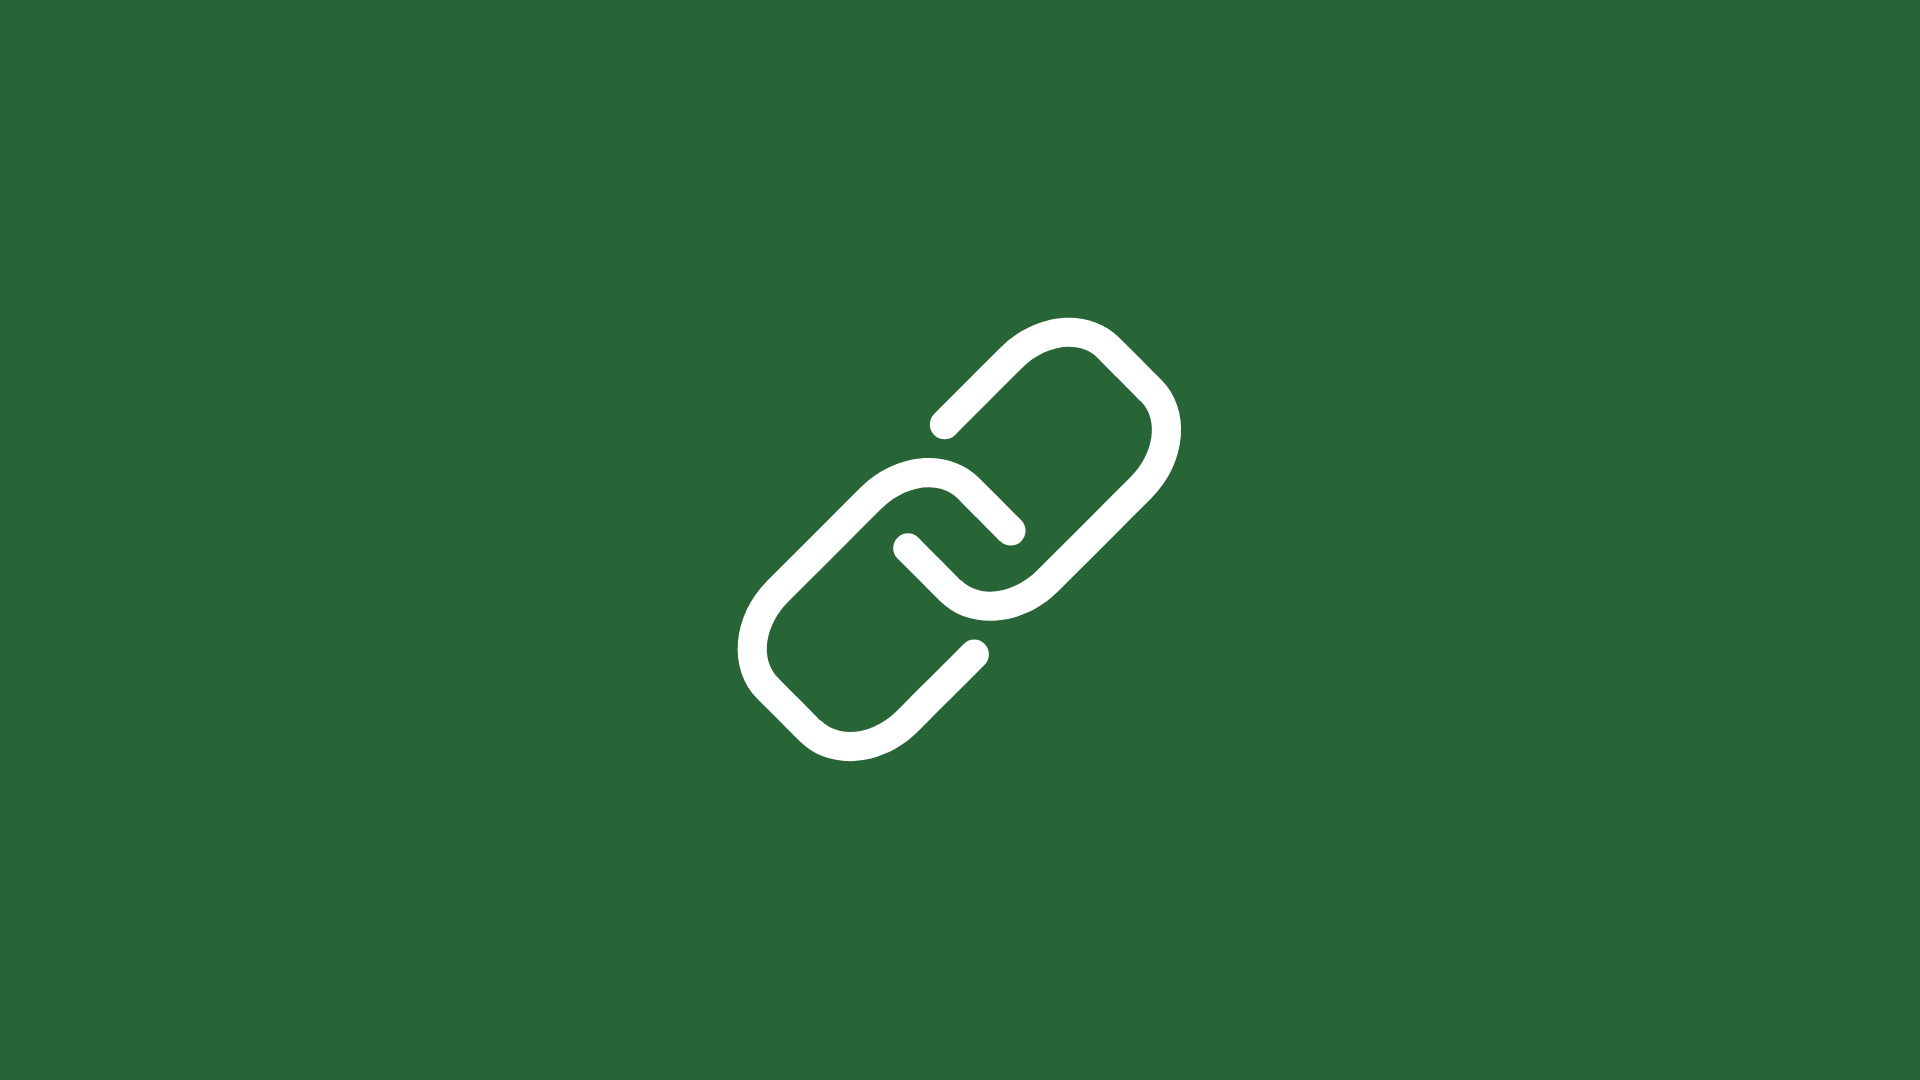 Icon of a hyperlink symbol